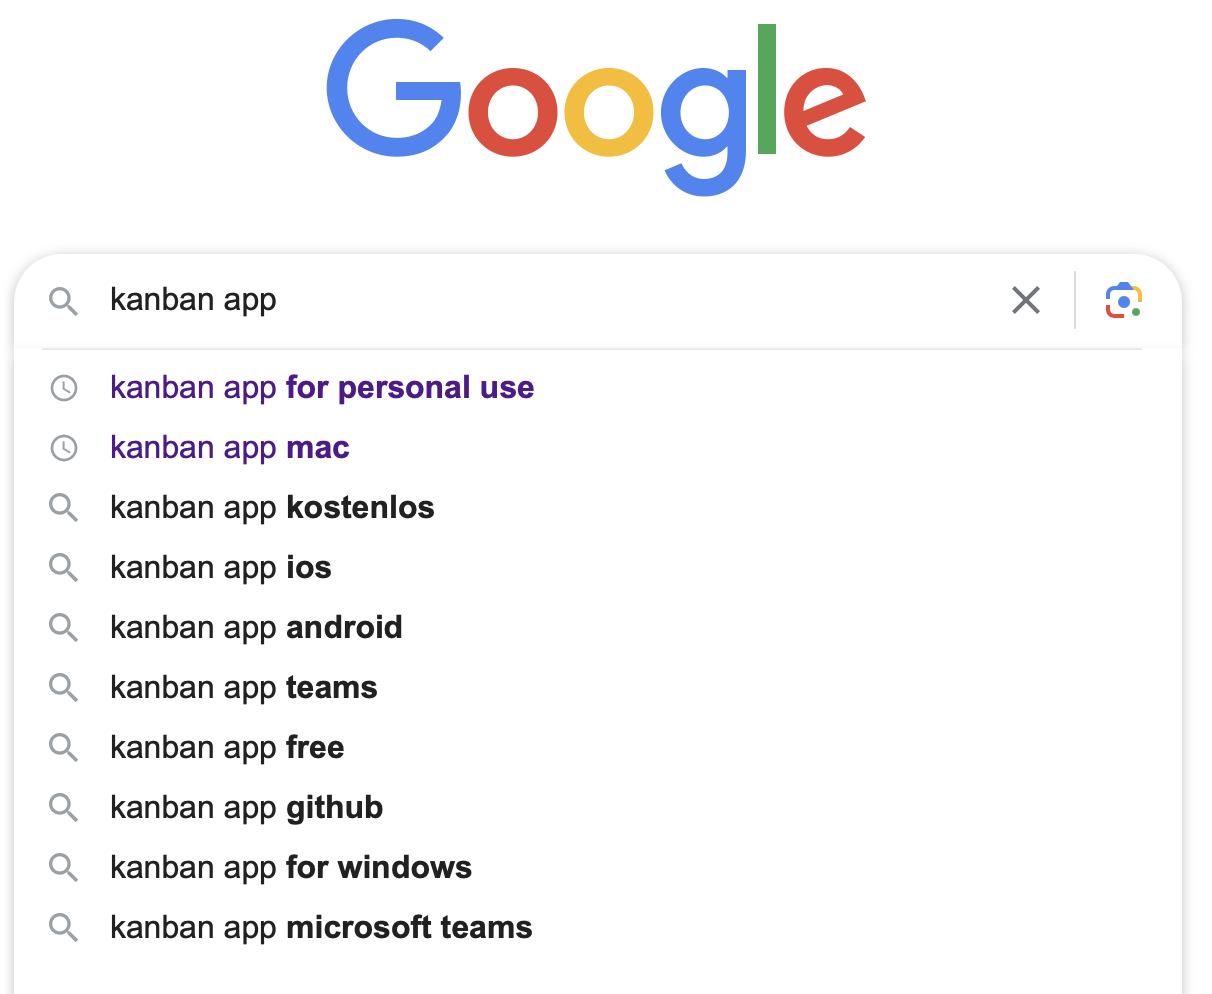 Google Kanban App Auto Suggest